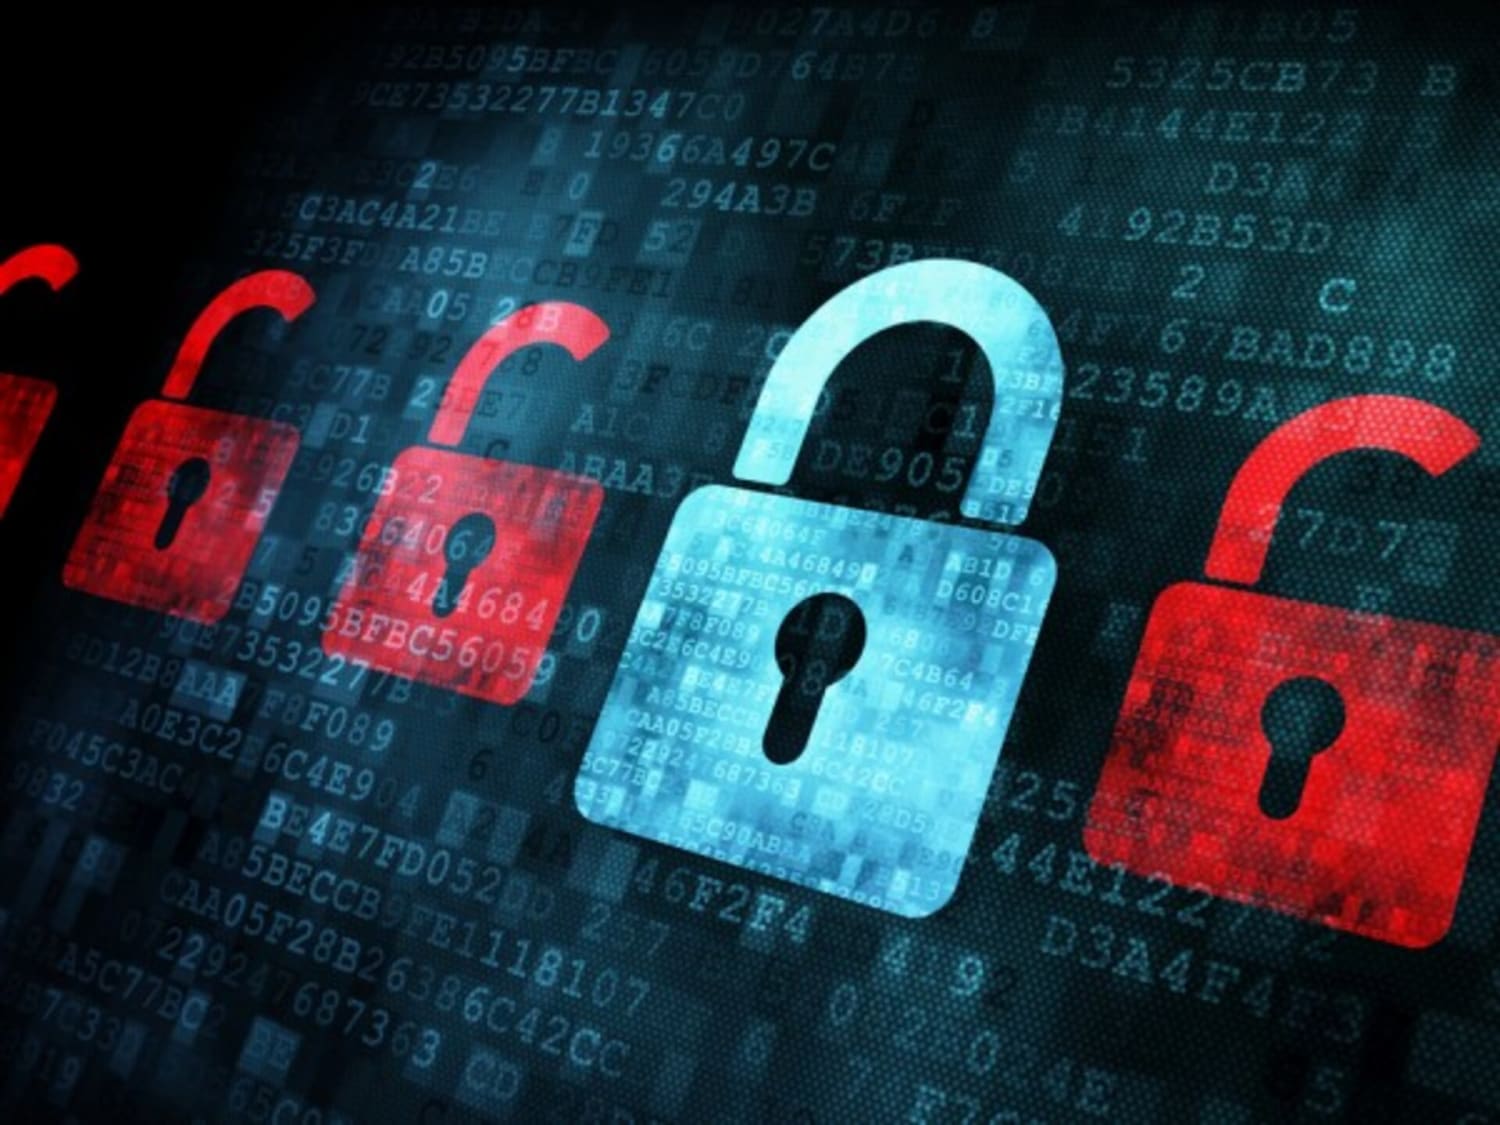 ESA practices cybersecurity